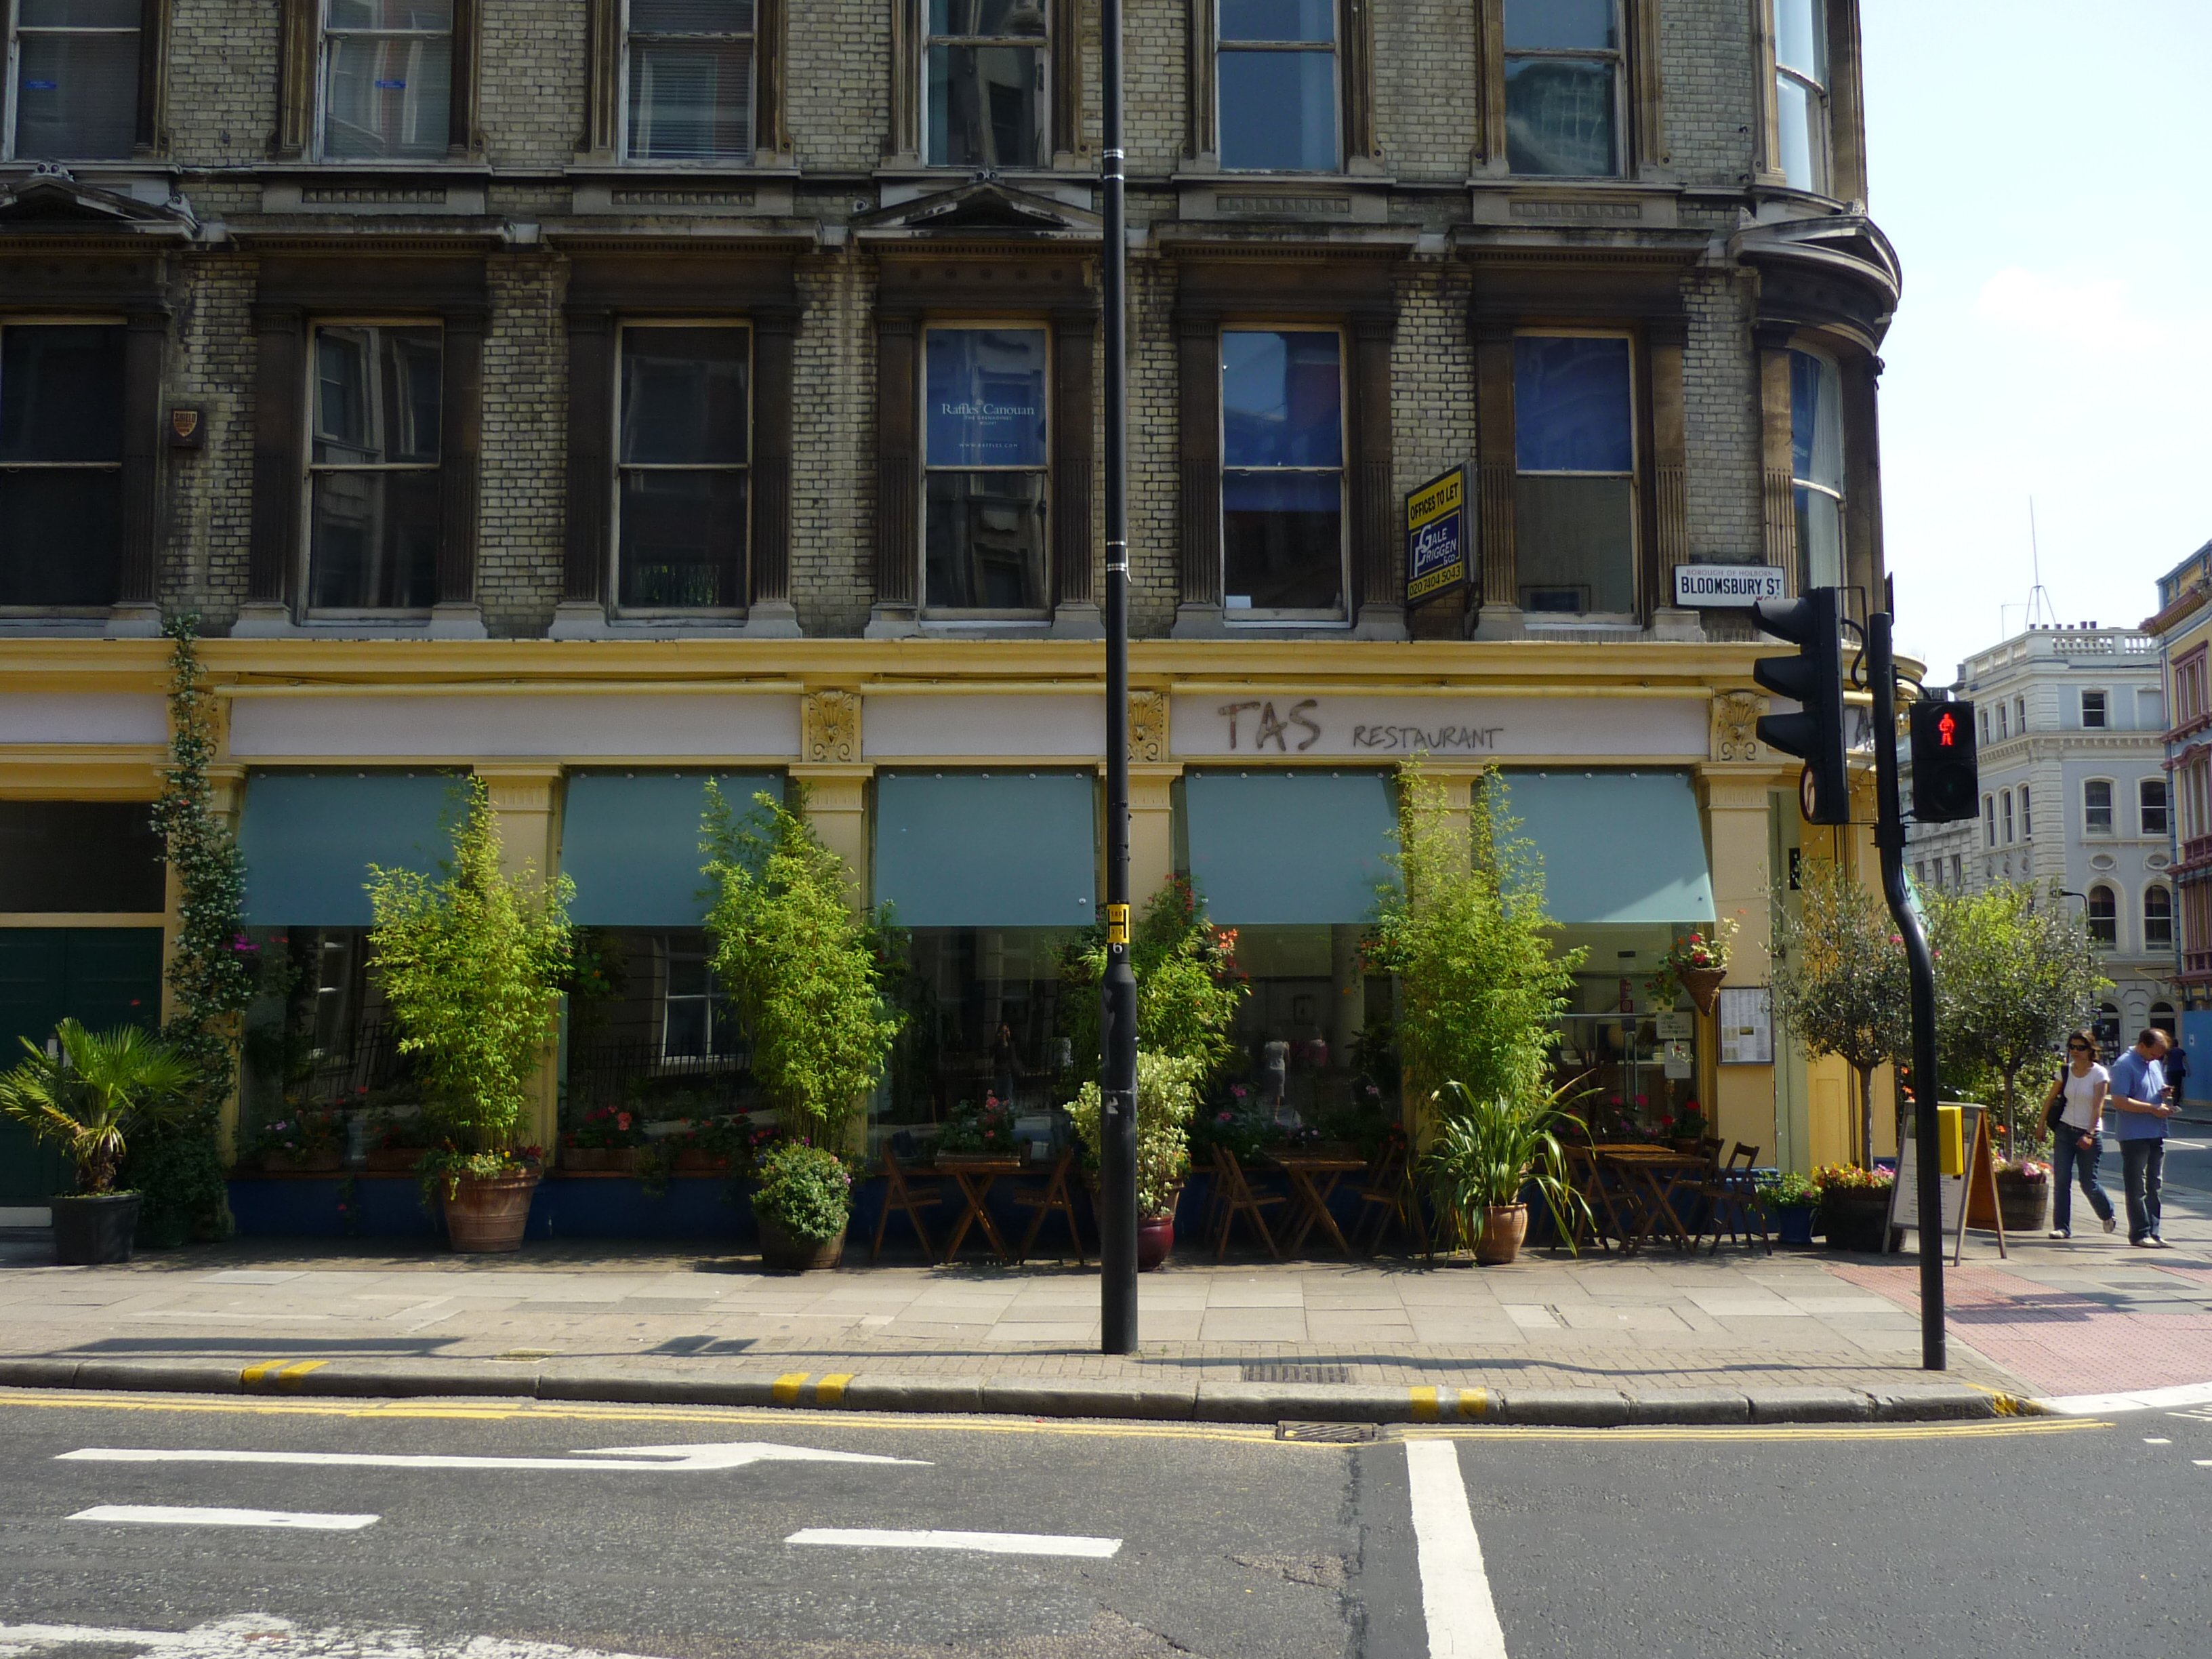 camouflage jurk Bloeien Tas Restaurants in London: 1 reviews and 1 photos